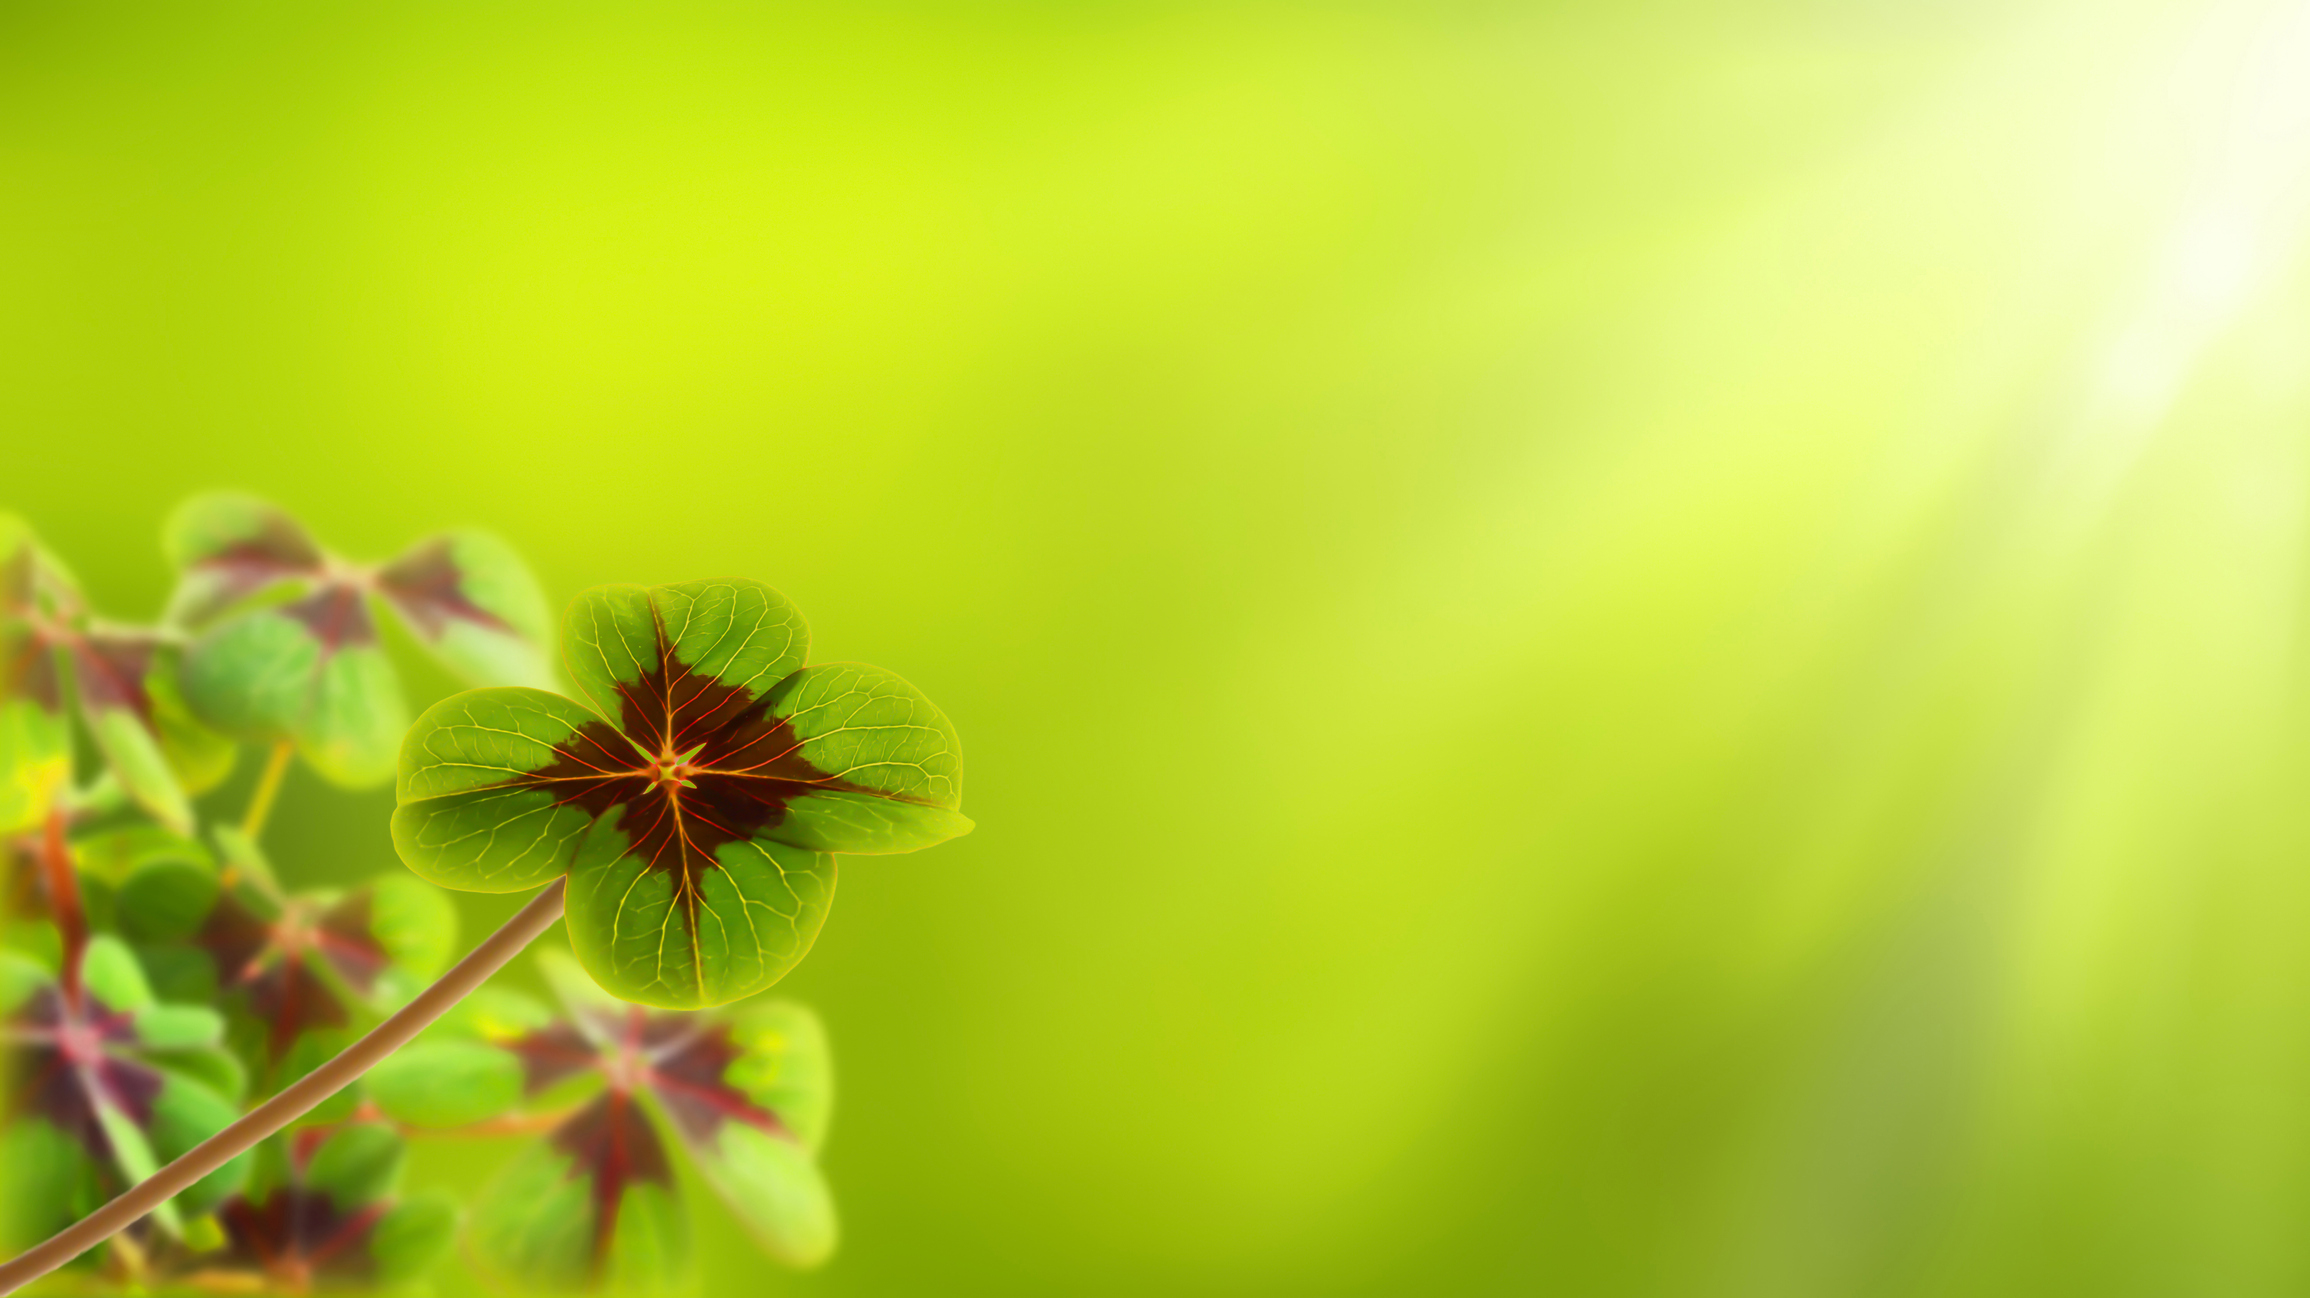 four leaf clover on bright blurred background